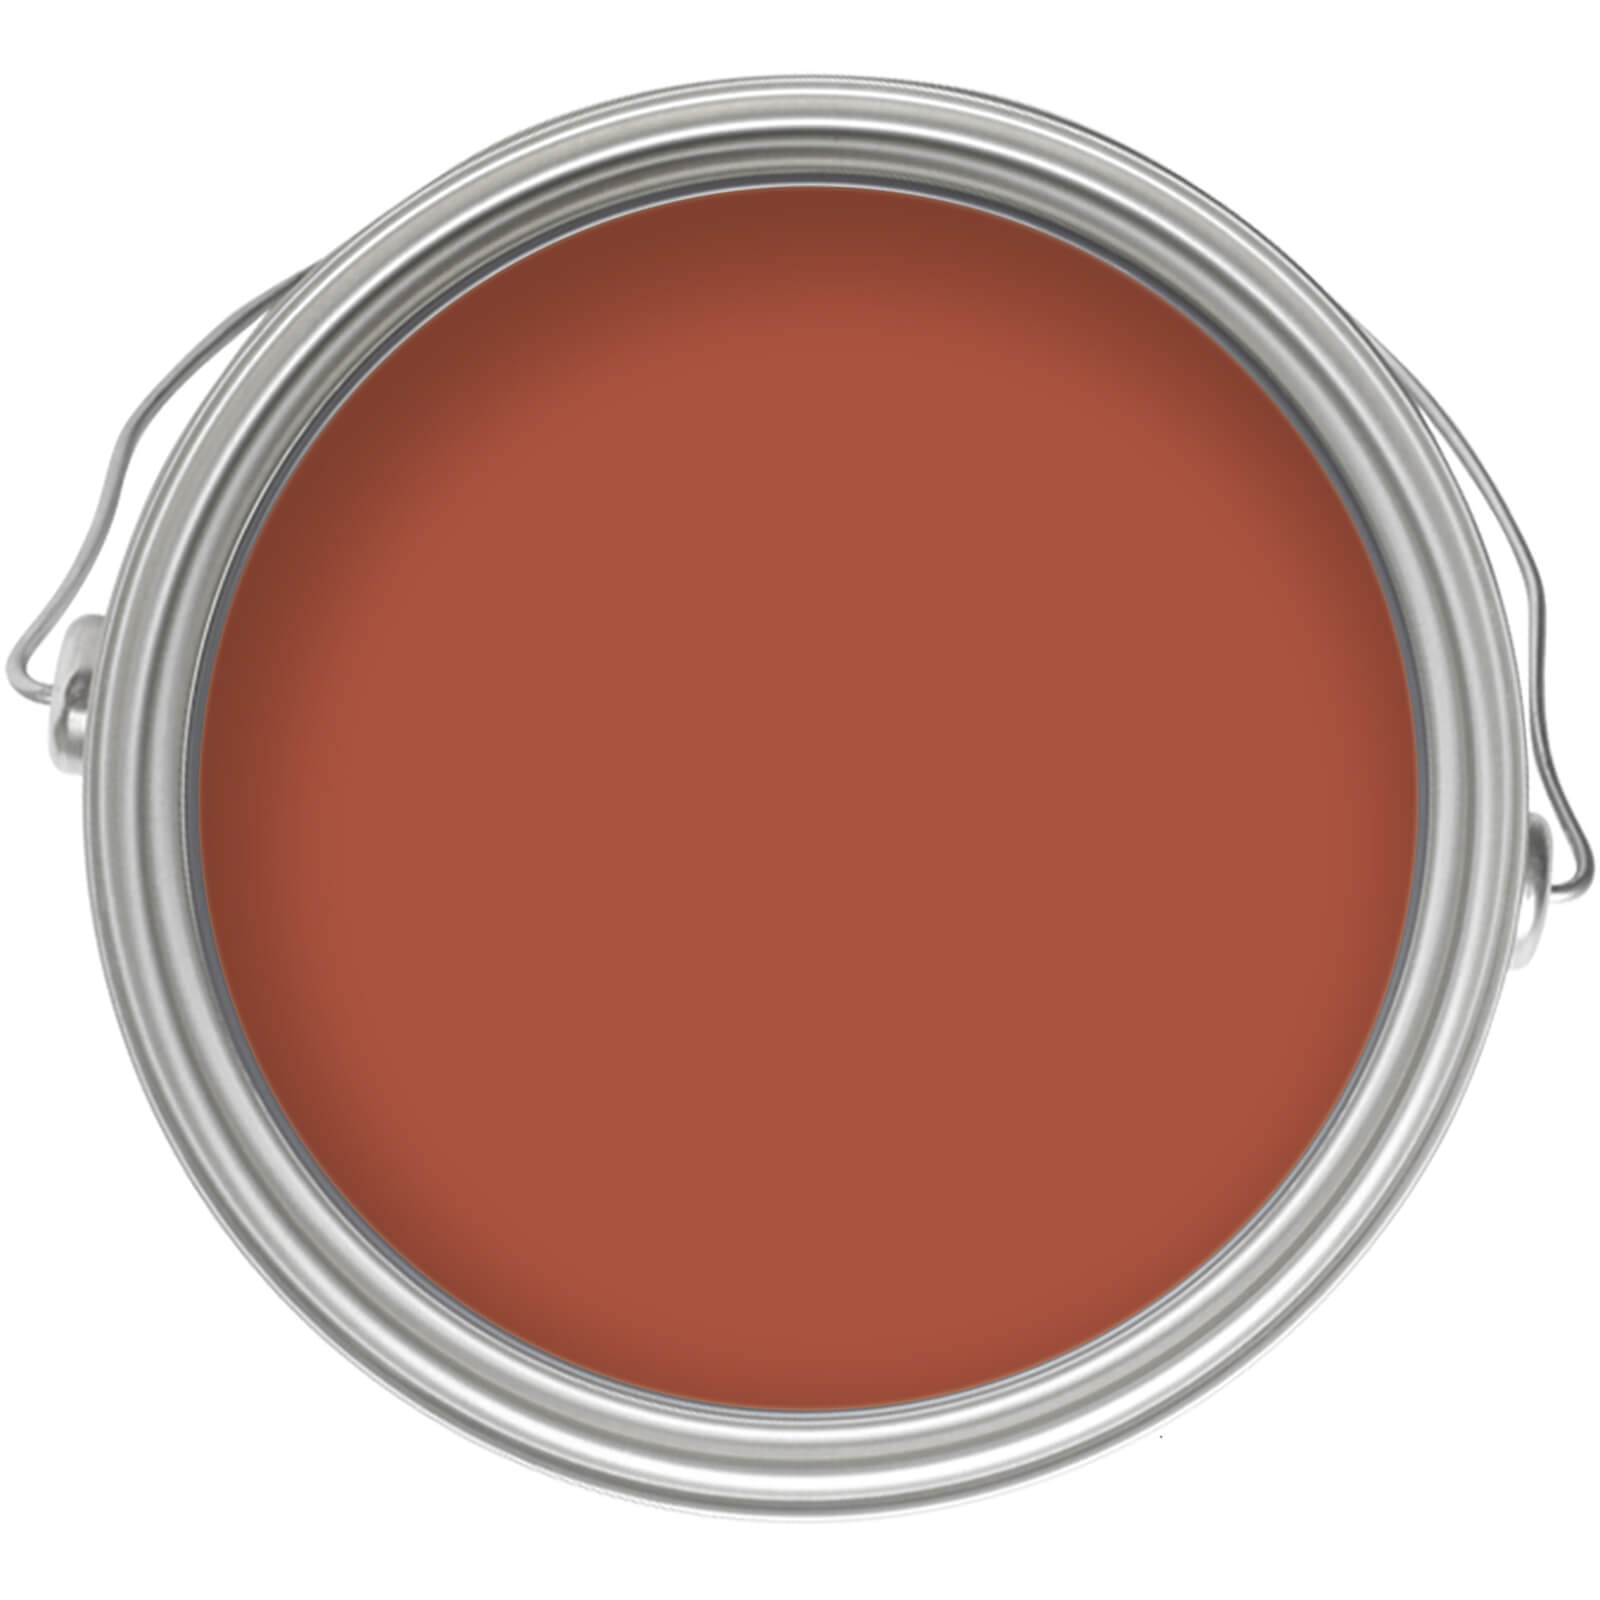 Homebase Tough & Durable Matt Paint Orange Glow - 2.5L